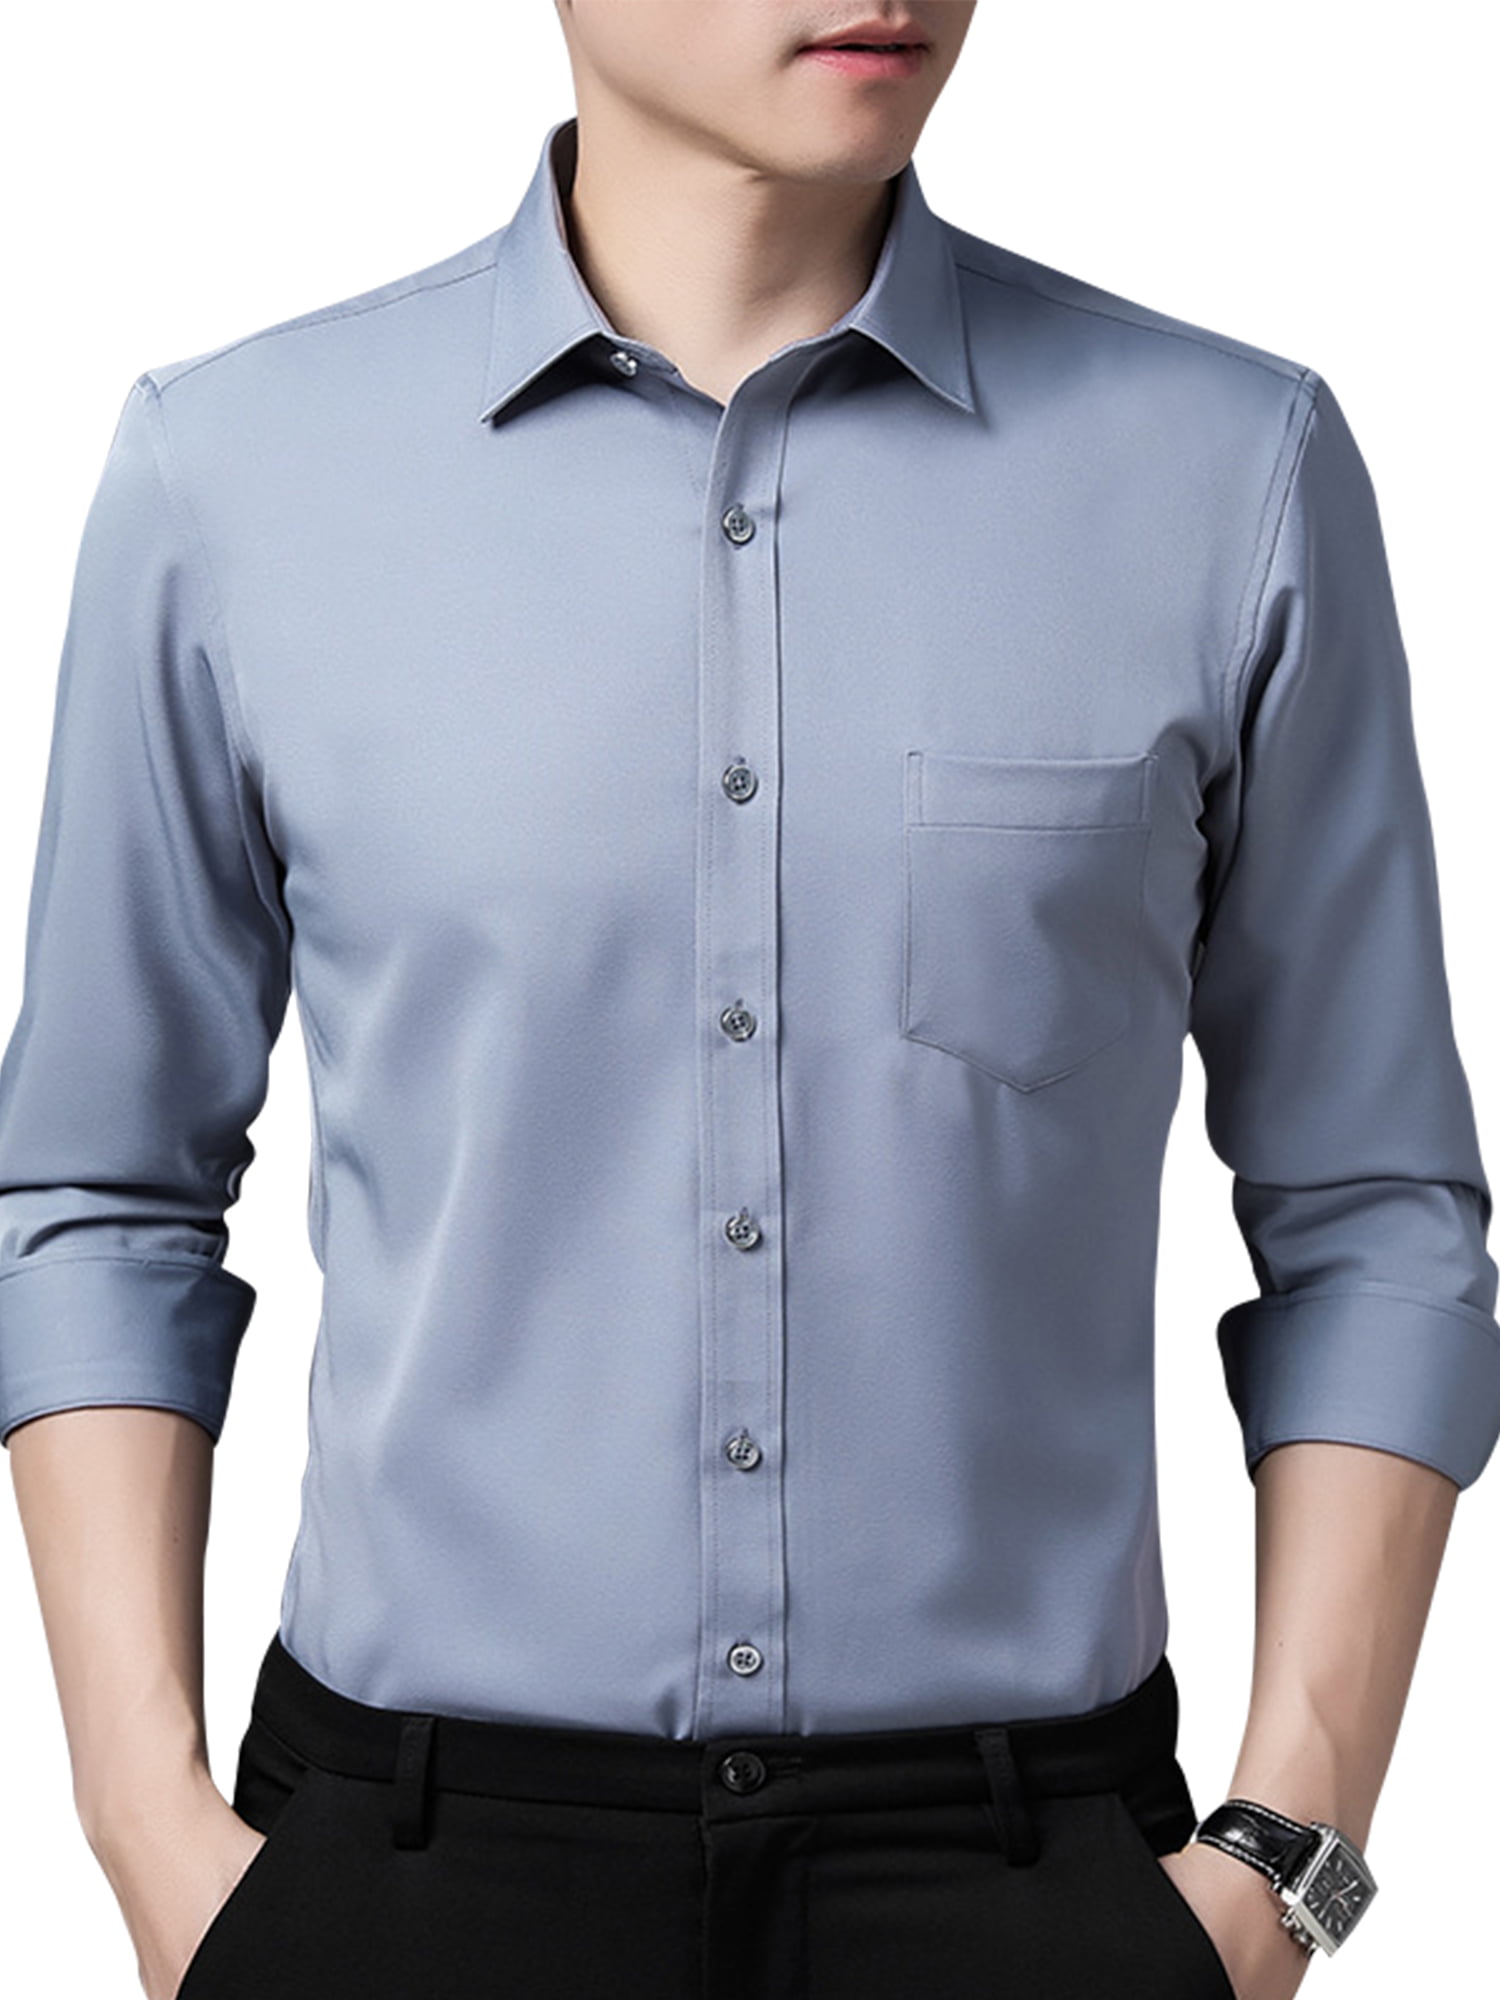 DY coperate Mens Long Sleeve Dress Shirt Litter Star Printed Shirt Slim Fit Tops Blouse Button Down